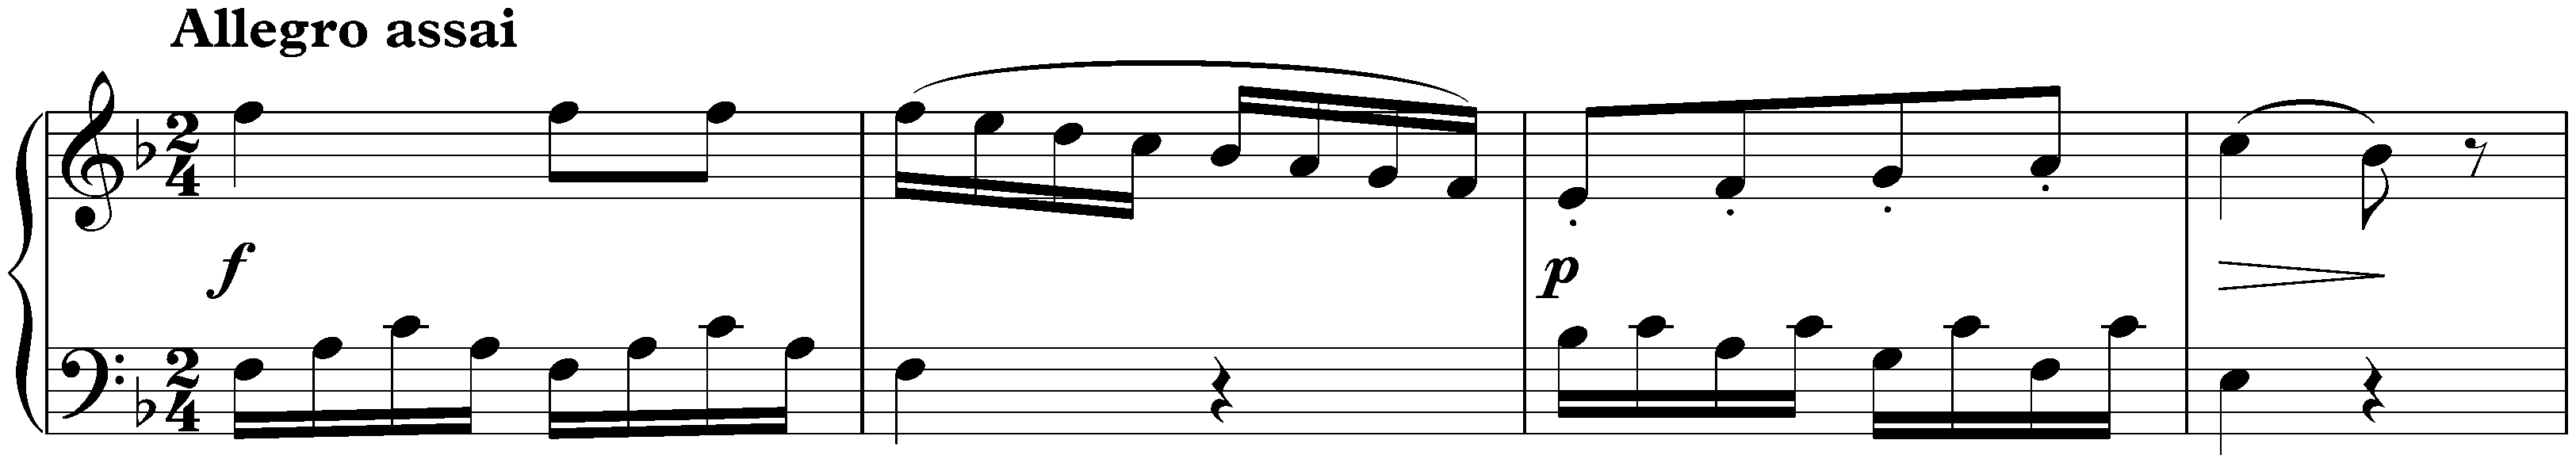 Sonatina in F major, Anh. 5 no. 2; 1. Allegro assai